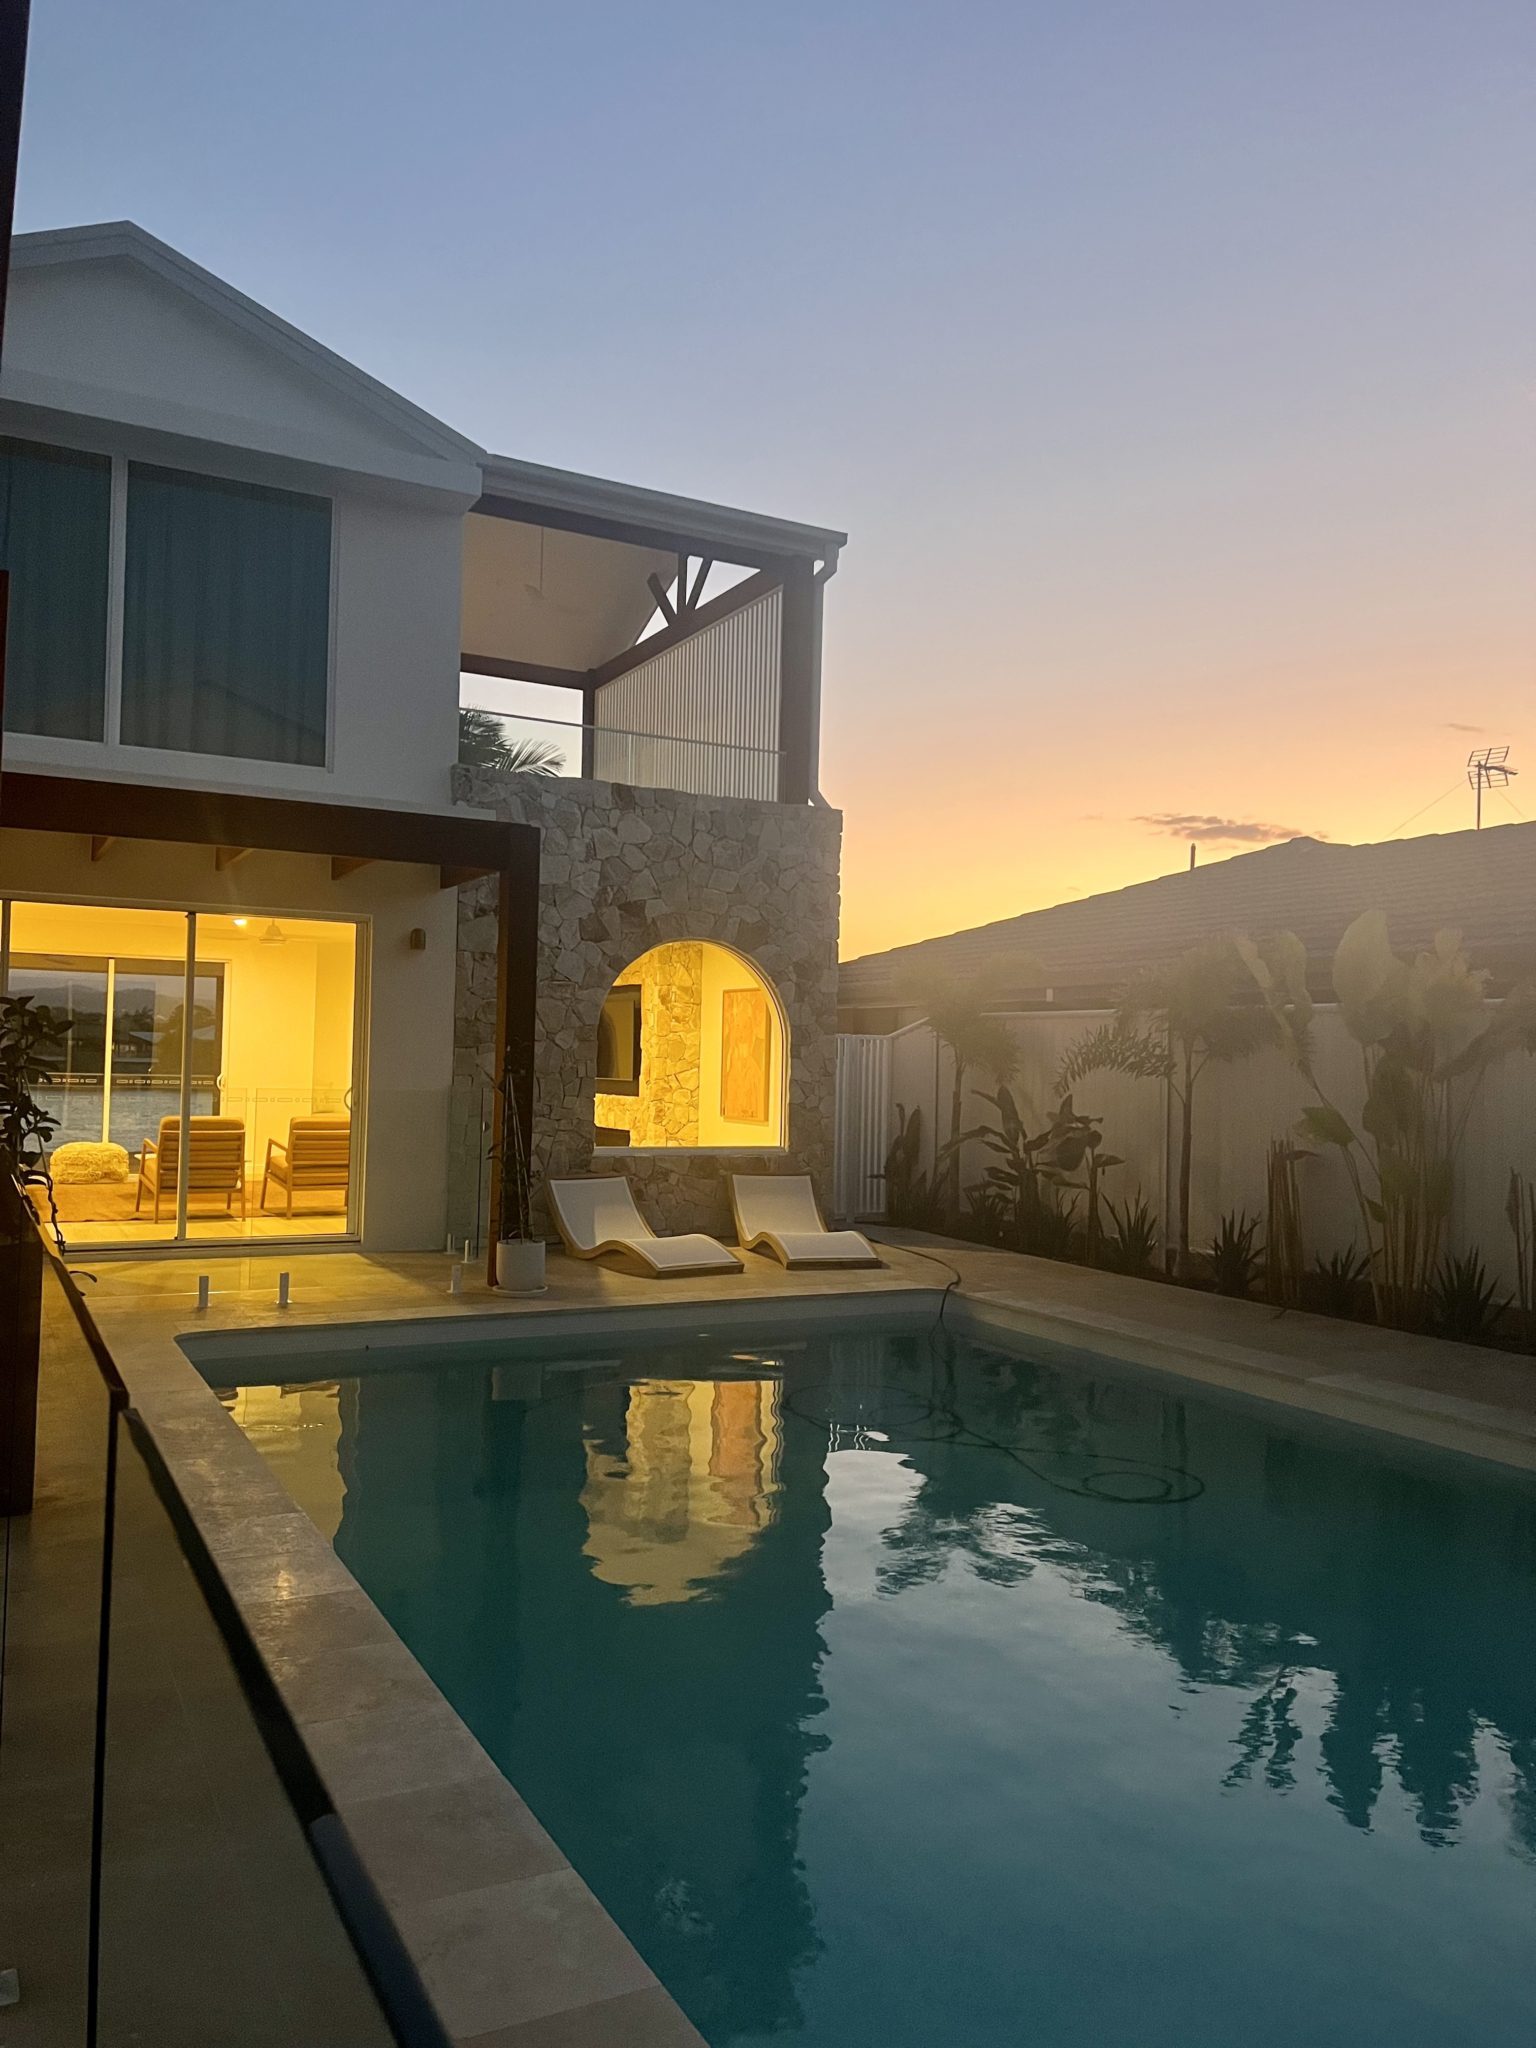 Luxury Resort Style Gold Coast Home